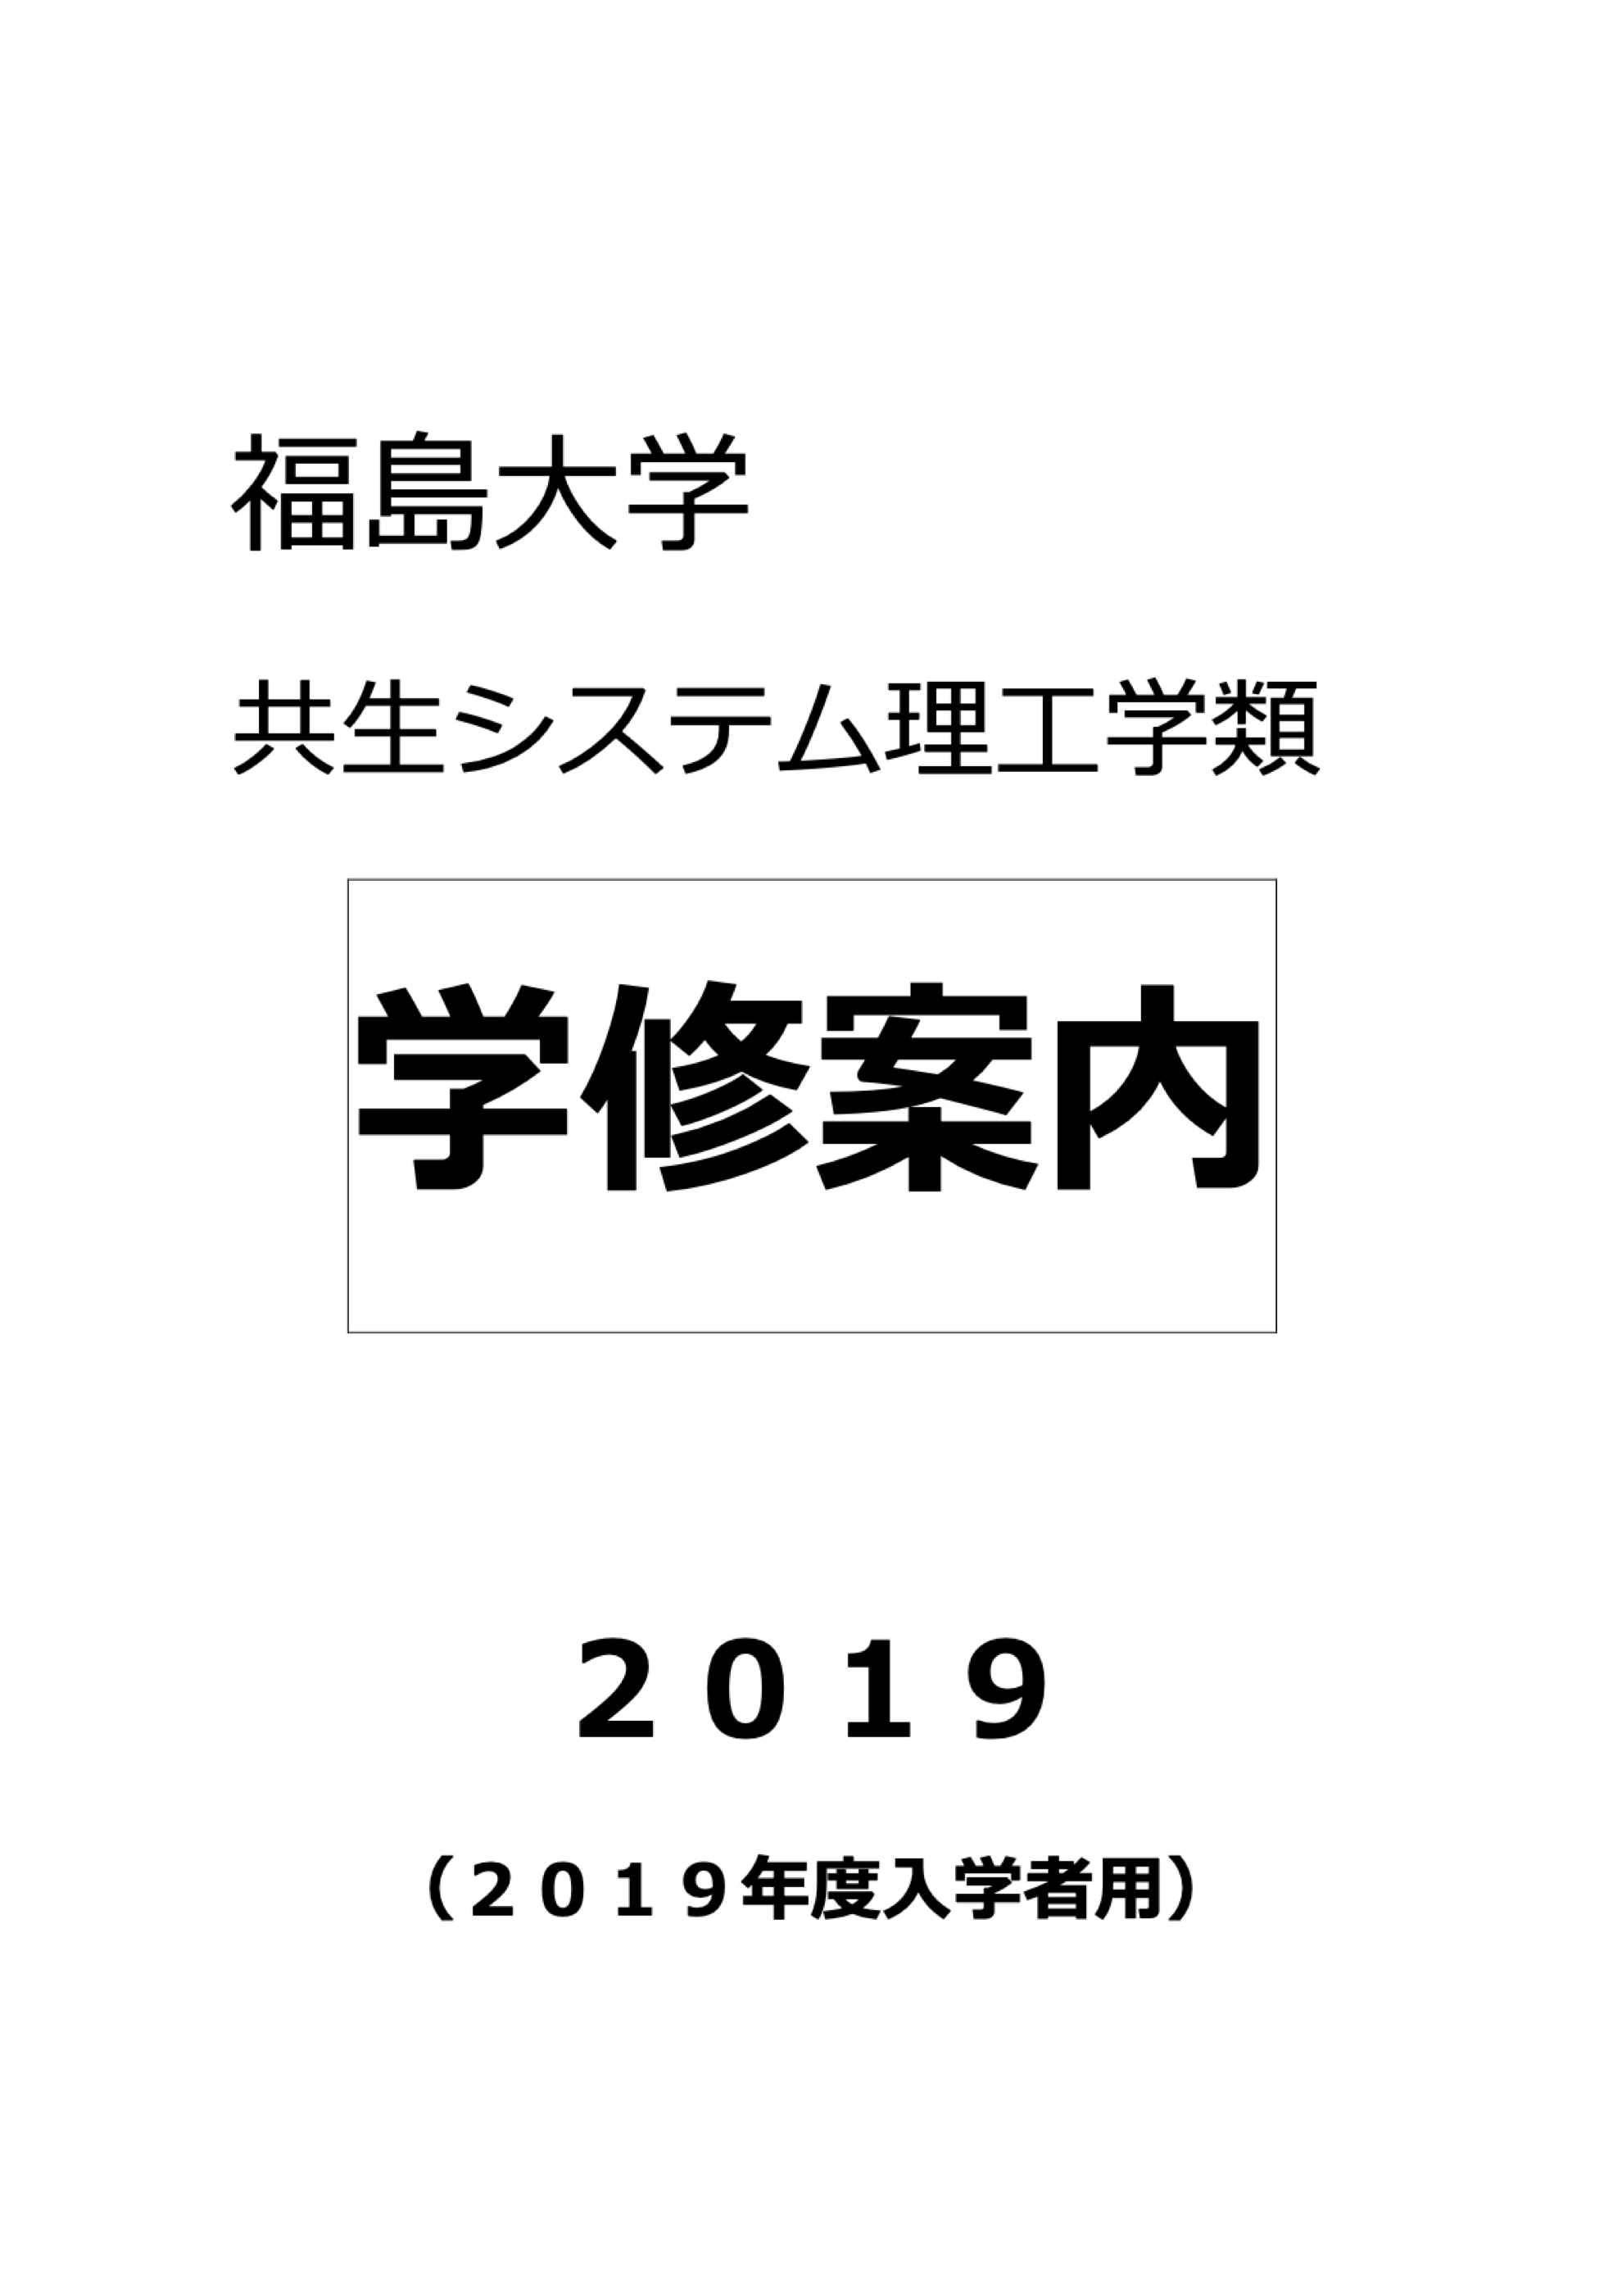 http://kyoumu.adb.fukushima-u.ac.jp/guide/2019/common/Files/2019/03/87d3c28eff5186b4e89d855f17958559.jpg